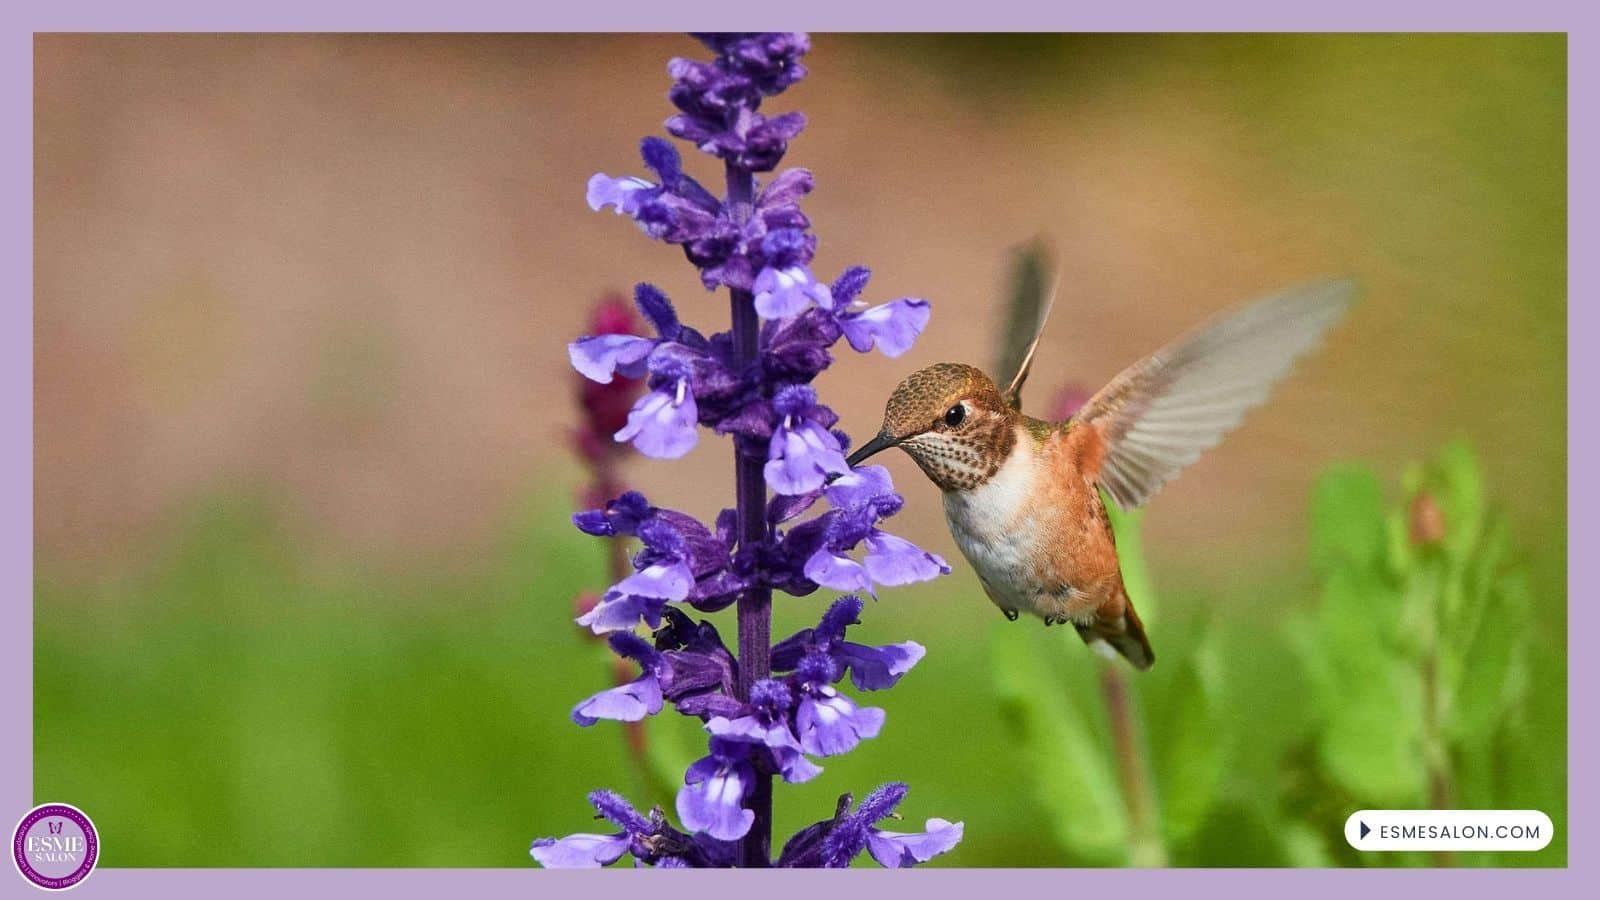 an mage of a Rufous Hummingbird drinking nectar